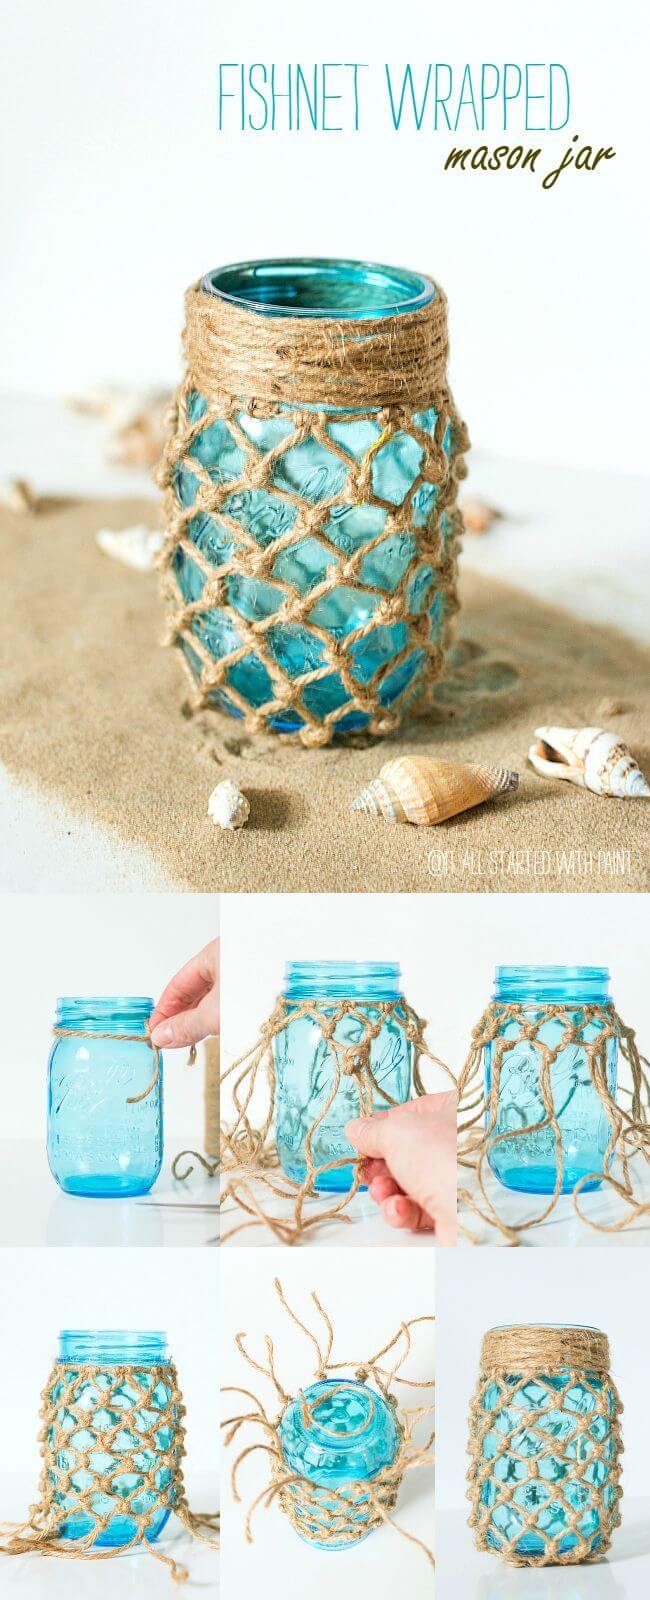 Mason Jar Crafts: 14 Easy and Creative Ideas